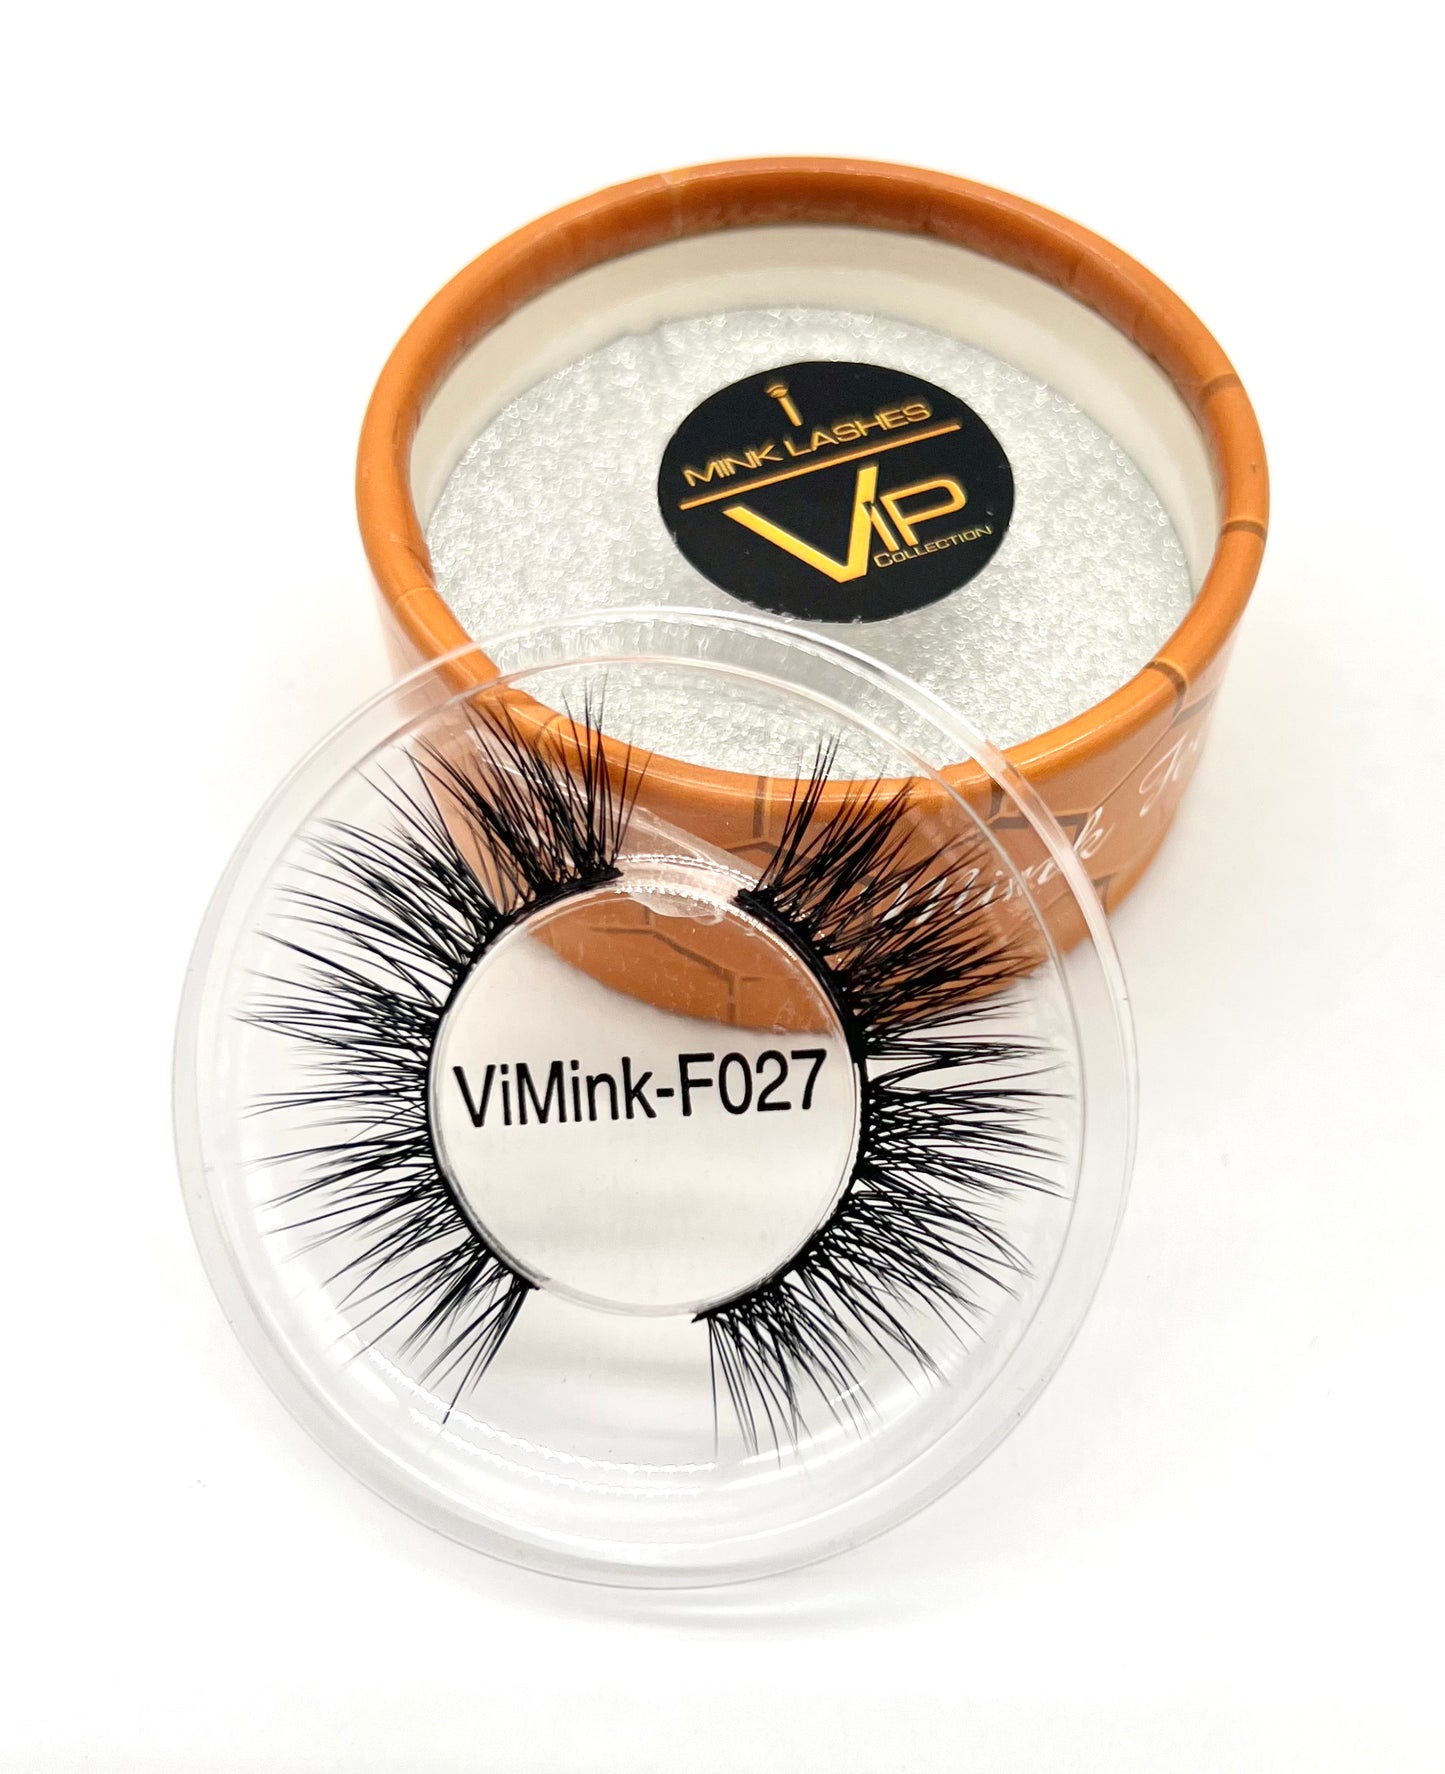 VIP iMink Super Flat Strip Lashes - 98% Mink Feel - Animal Free